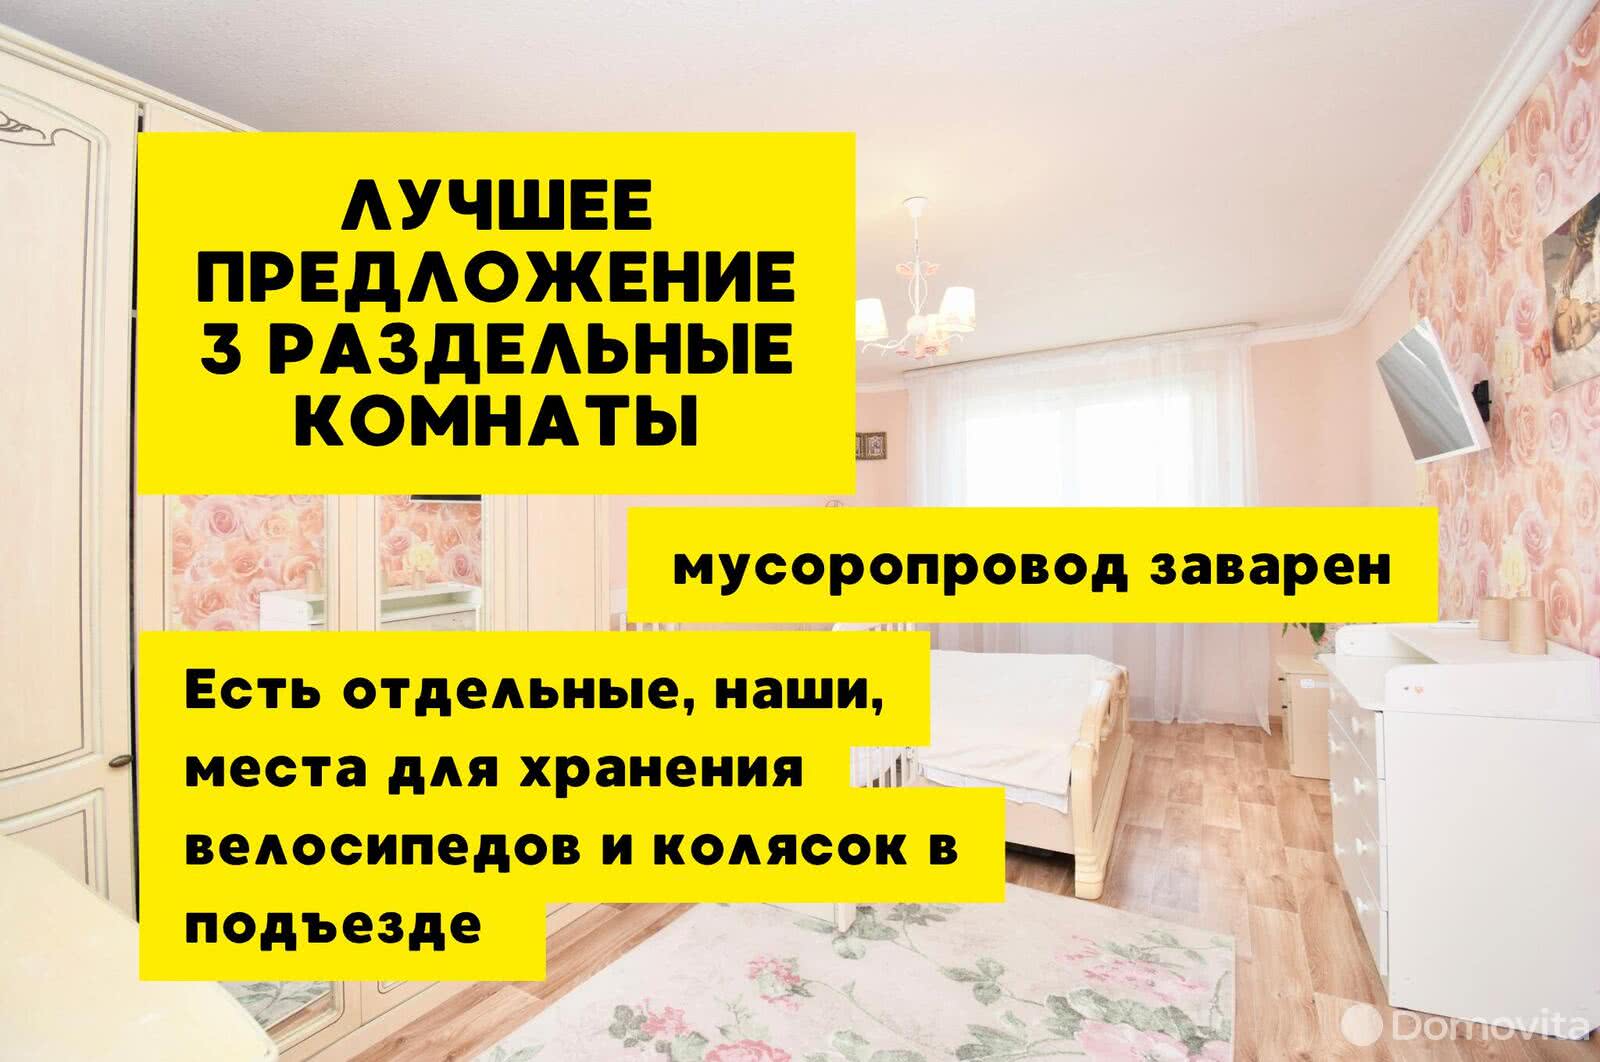 квартира, Минск, ул. Чичурина, д. 12, стоимость продажи 291 946 р.